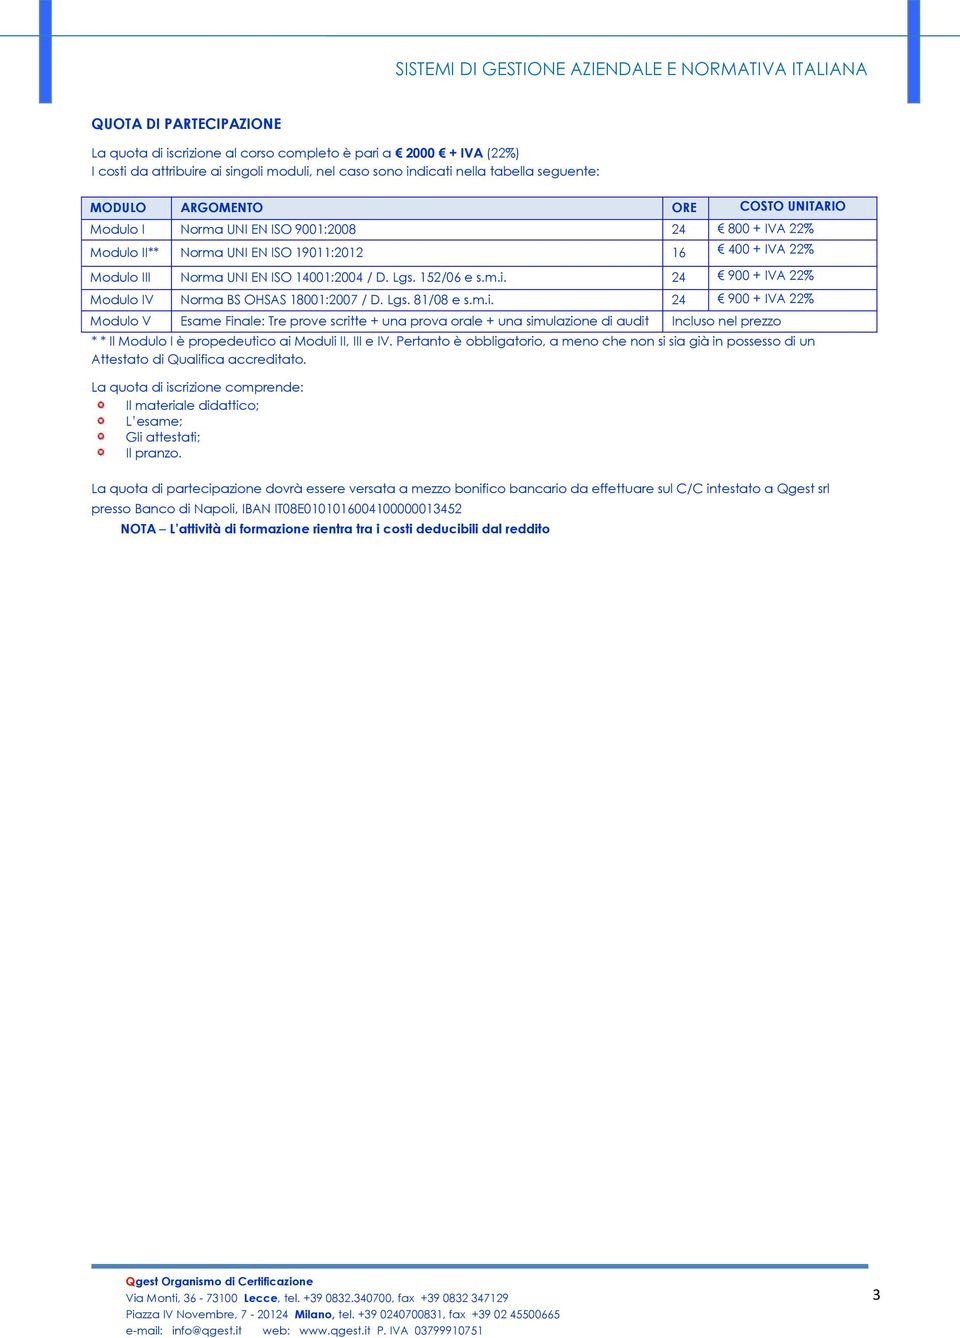 24 900 + IVA 22% Modulo IV Norma BS OHSAS 18001:2007 / D. Lgs. 81/08 e s.m.i.